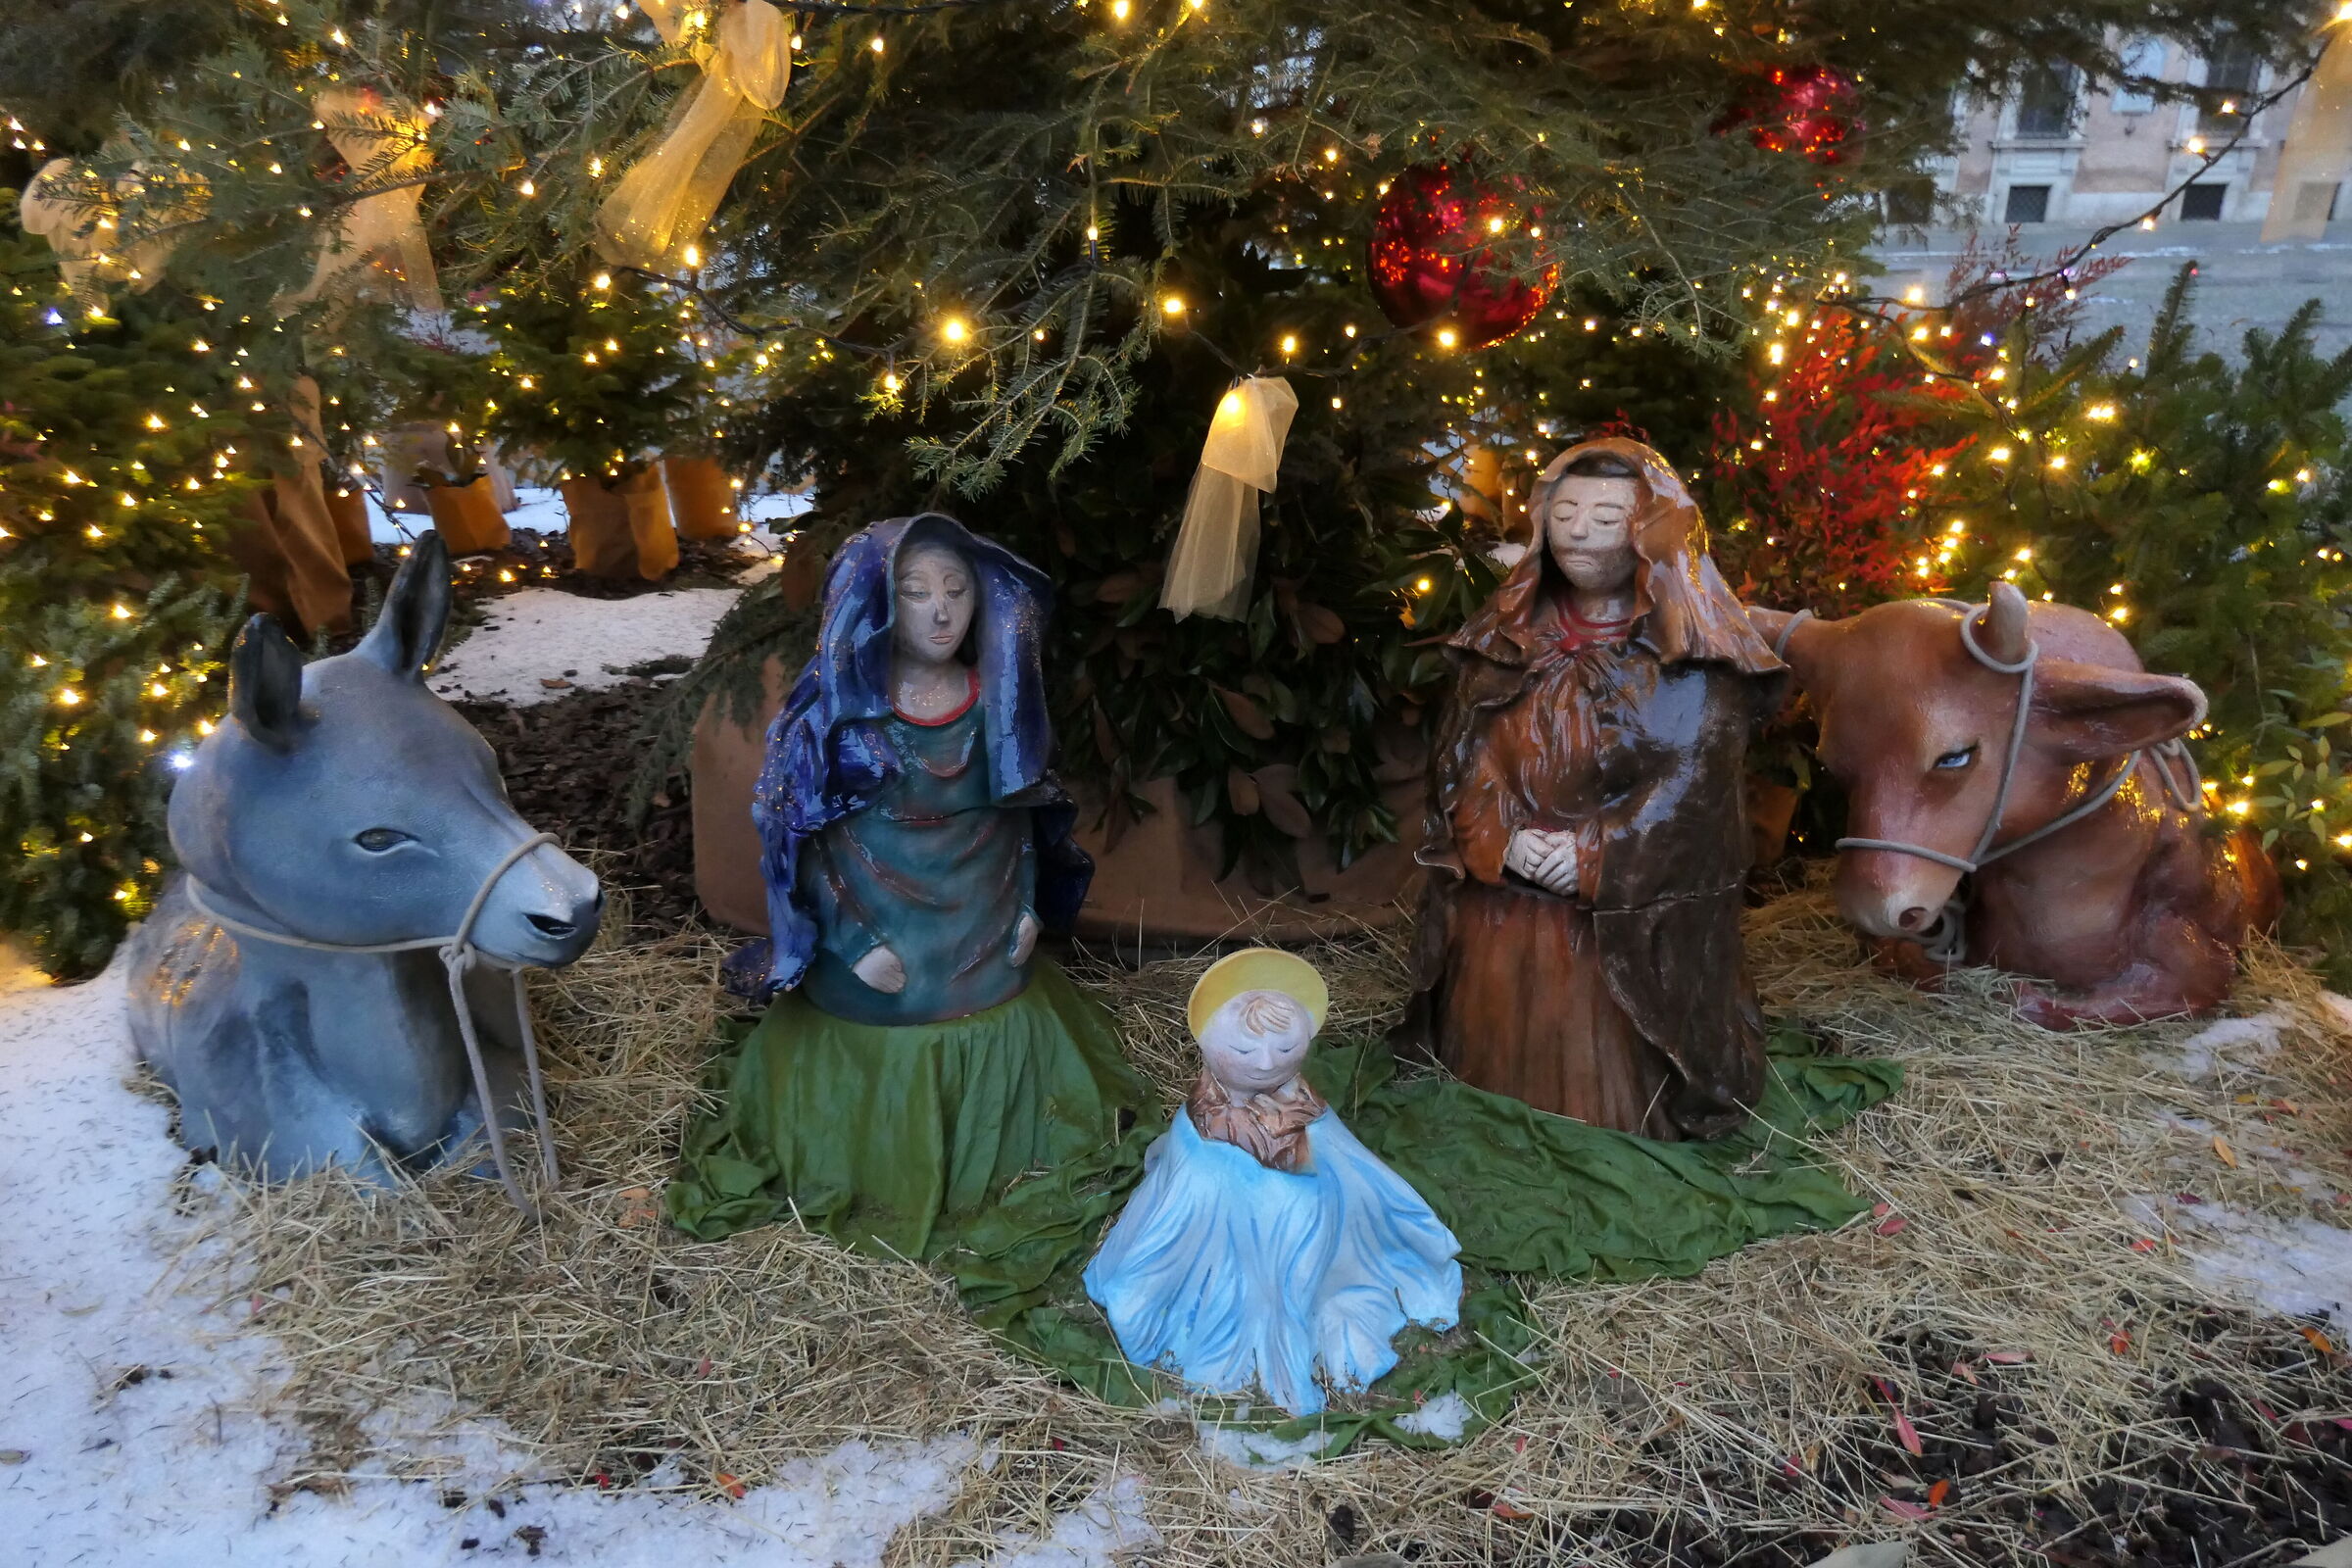 Nativity scene in Piazza Roma - Modena...